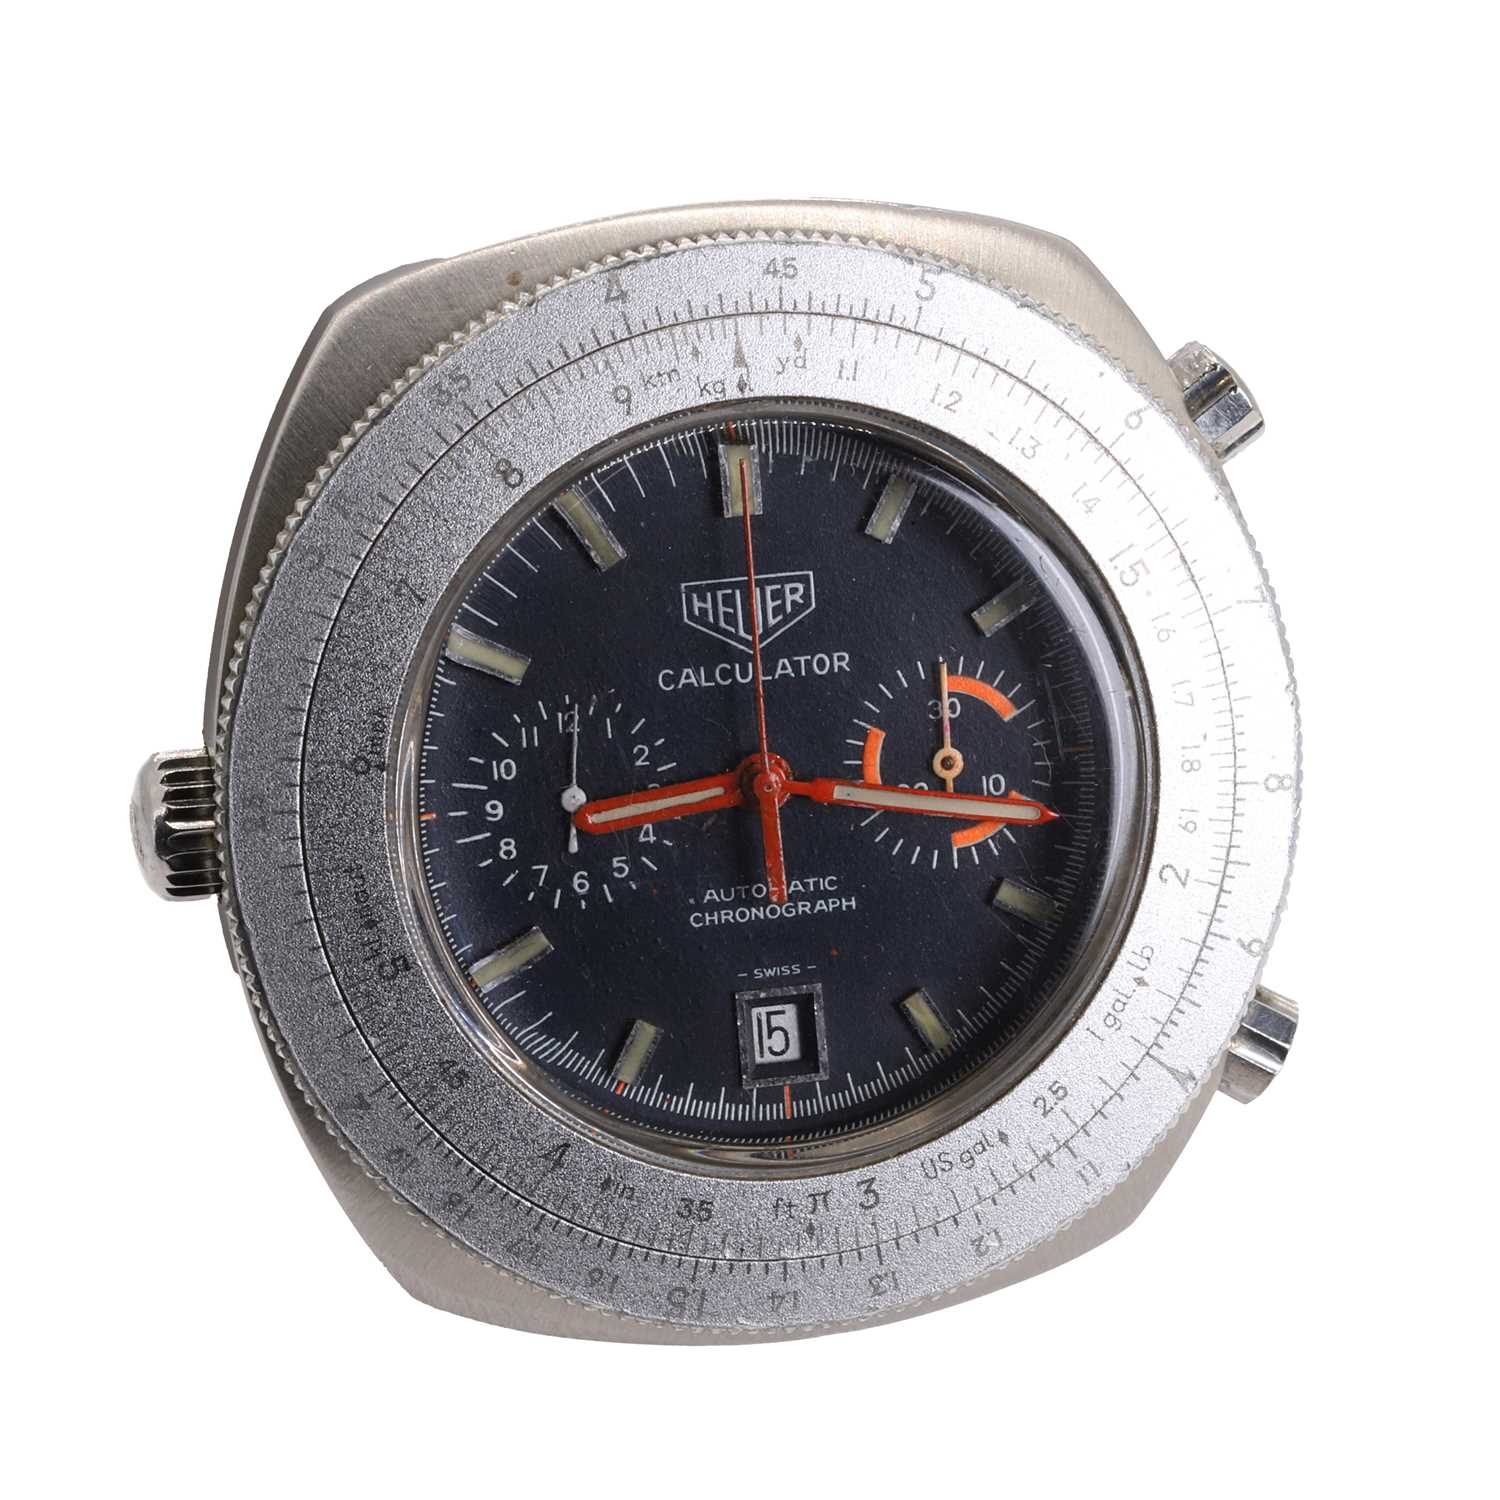 A gentlemen's Heuer Calculator automatic chronograph watch, - Image 2 of 5